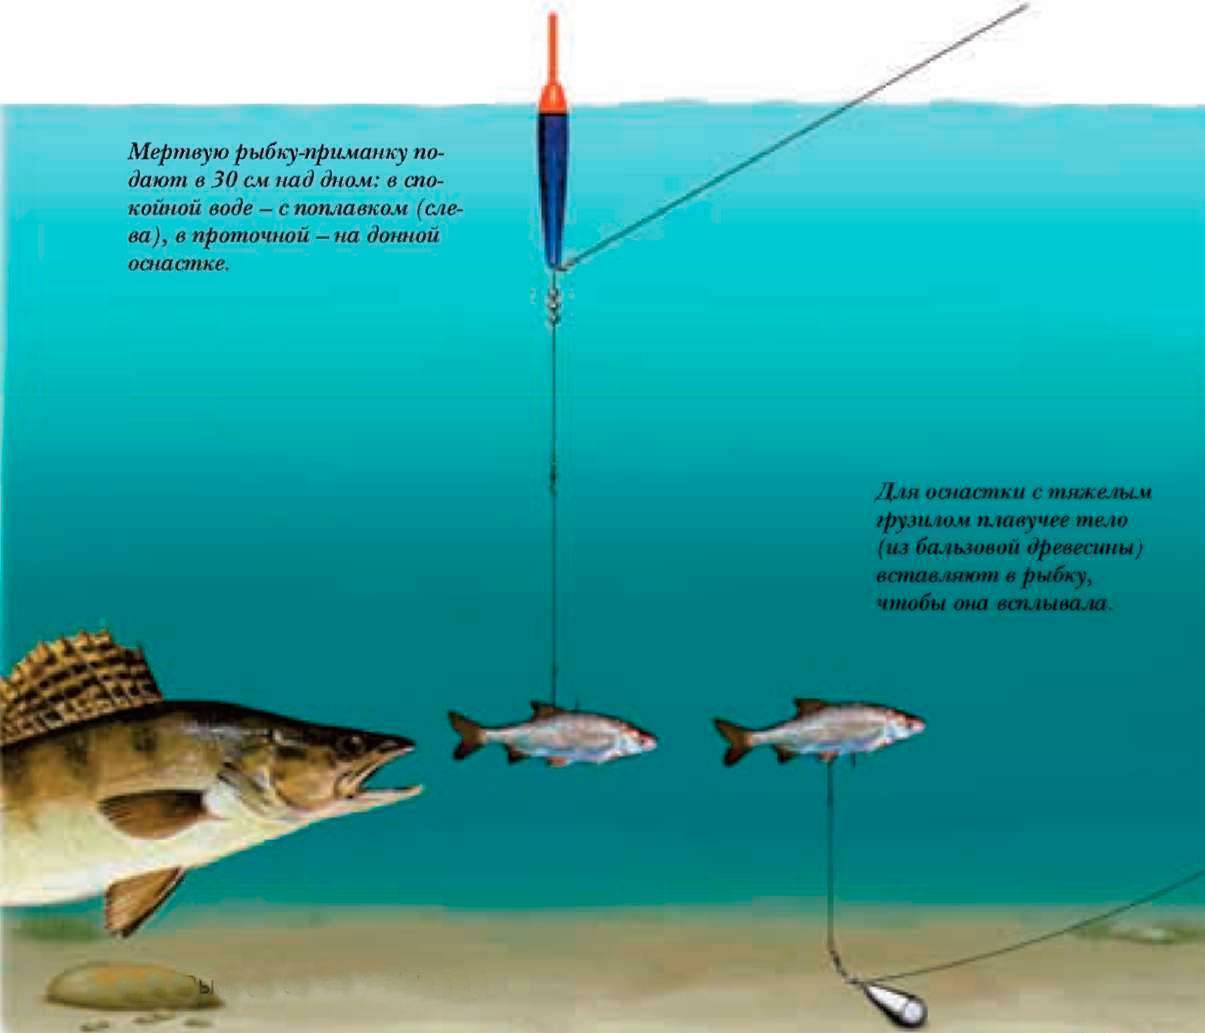 Ловля щуки на живца: эффективная рыбалка с берега и лодки, выбор снасти